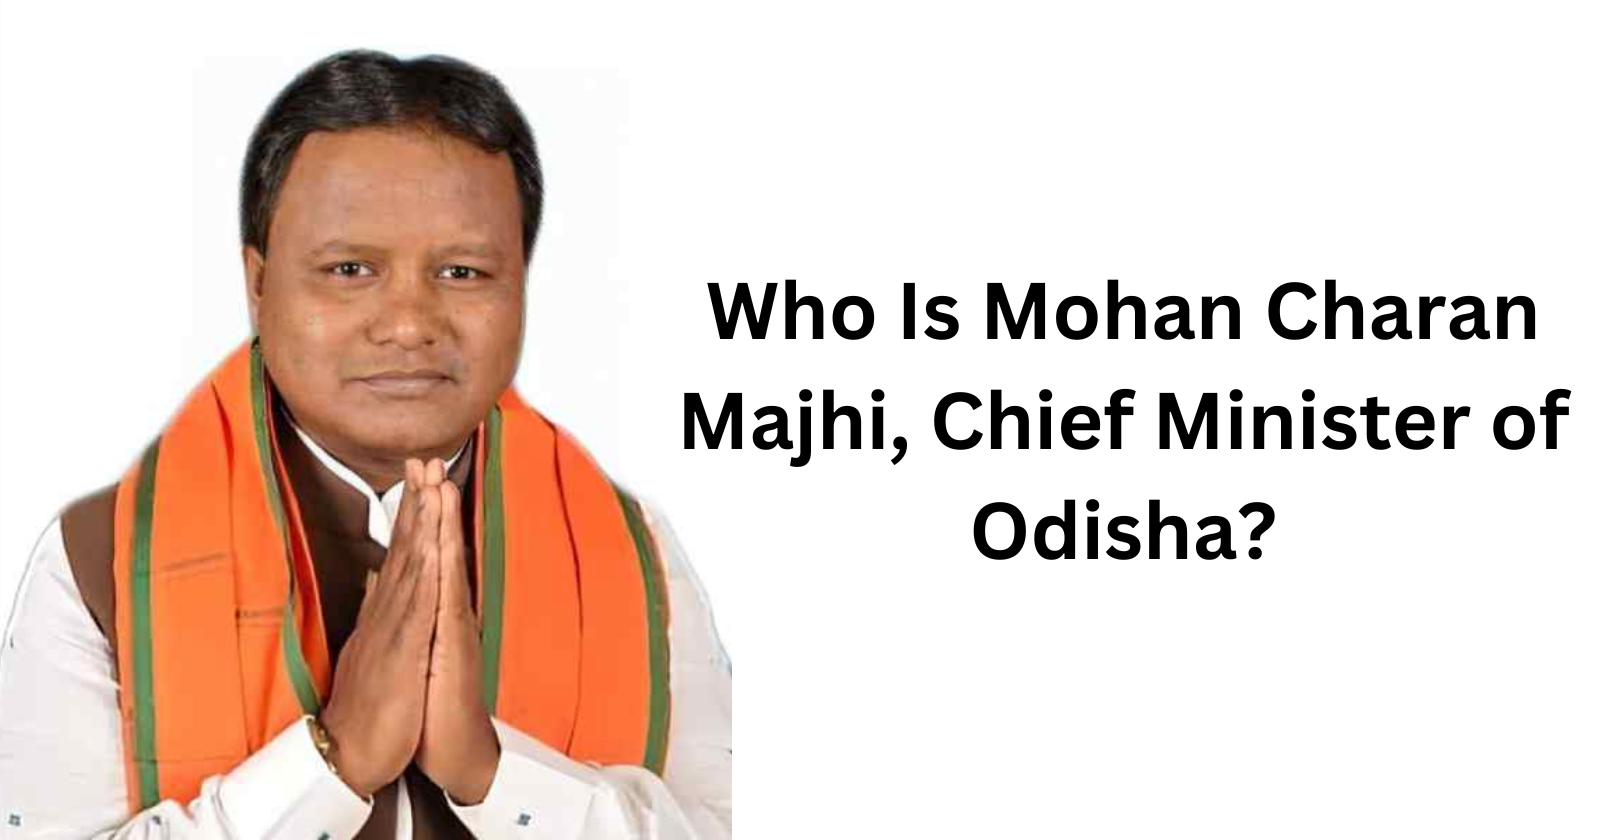 Mohan Charan Majhi